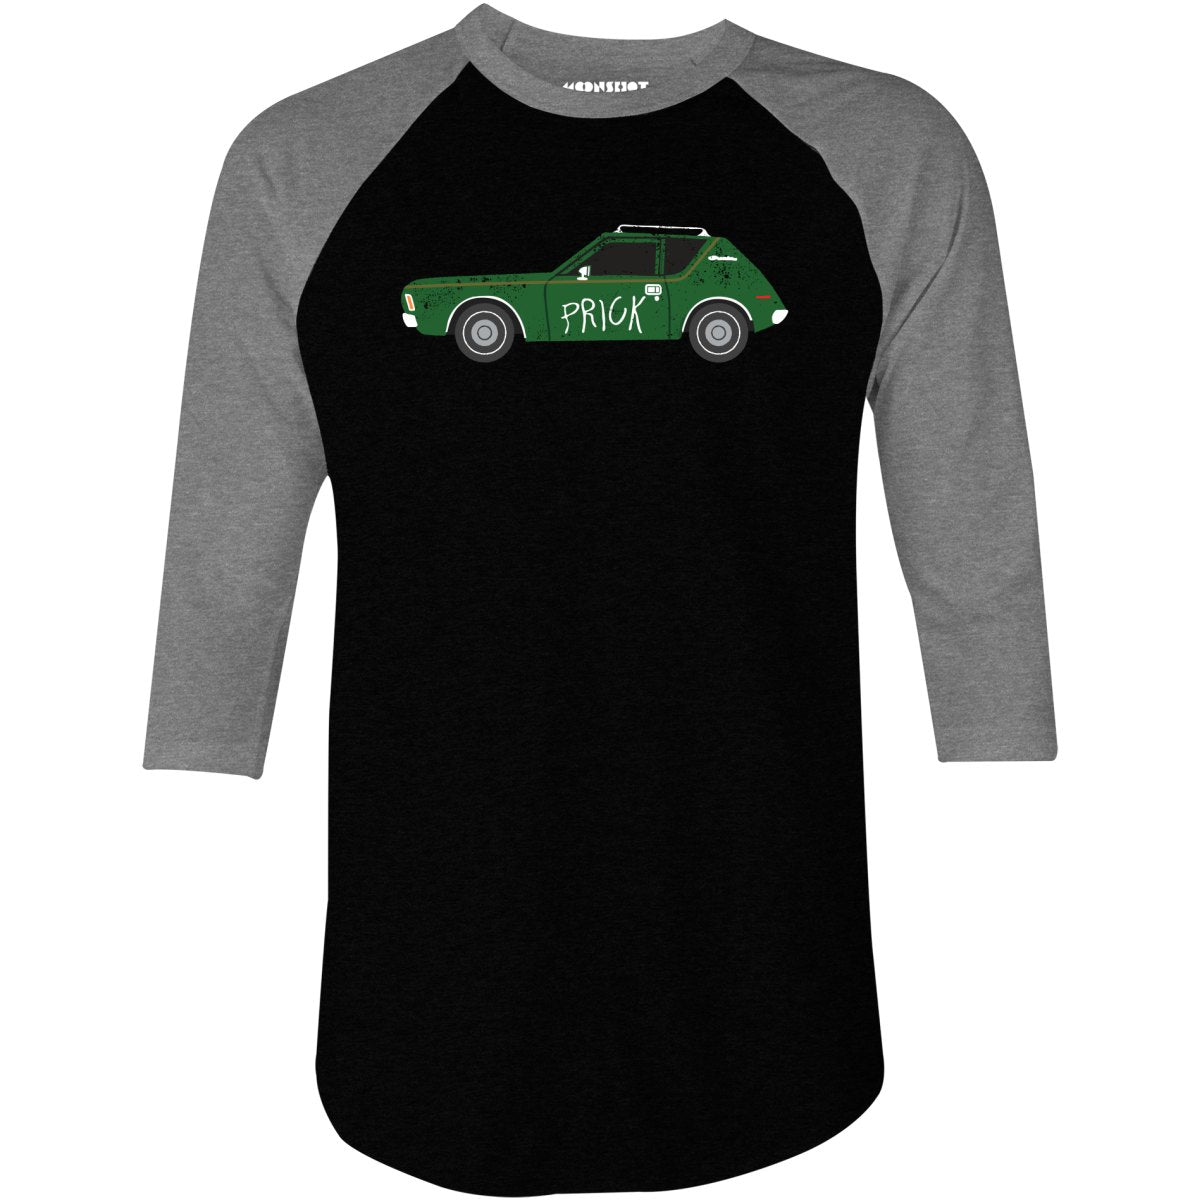 Prick Mike Damone's Car - 3/4 Sleeve Raglan T-Shirt